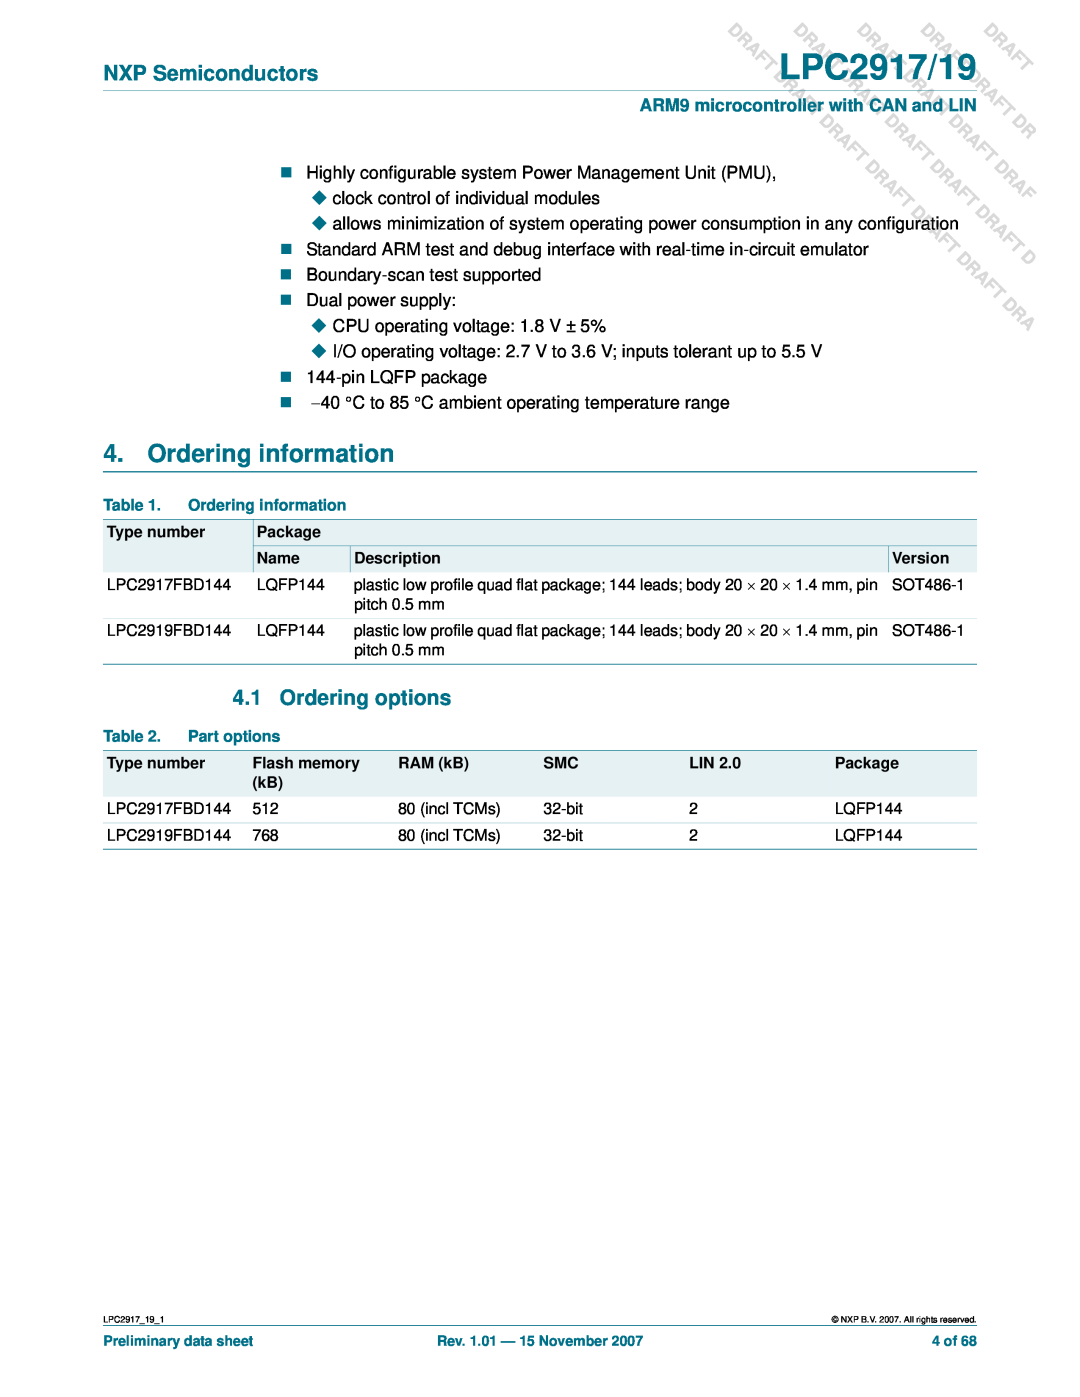 NXP Semiconductors LPC2919 user manual Ordering information, DLPC2917/19 